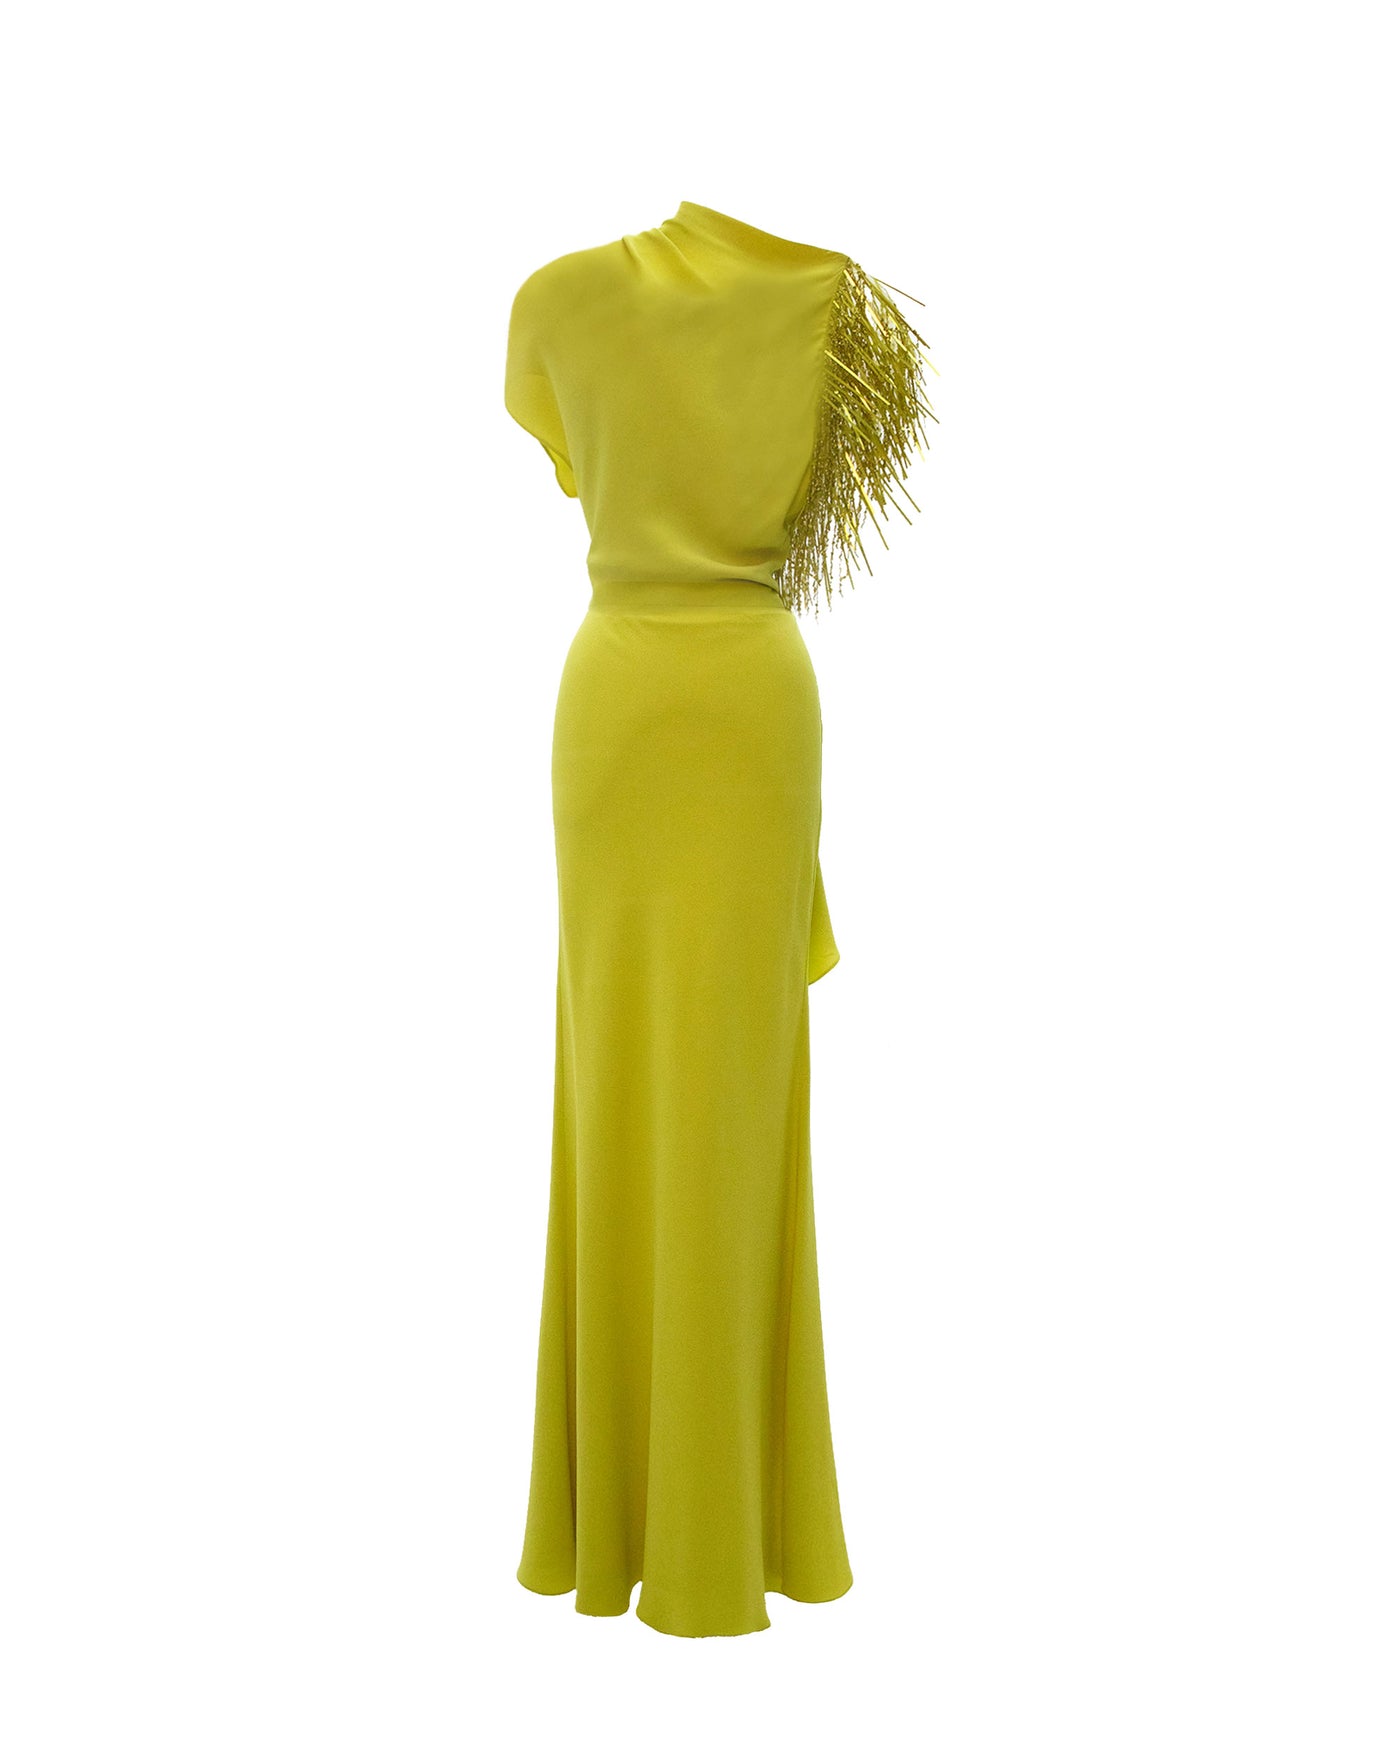 Asymmetrical Embellished Lime Dress